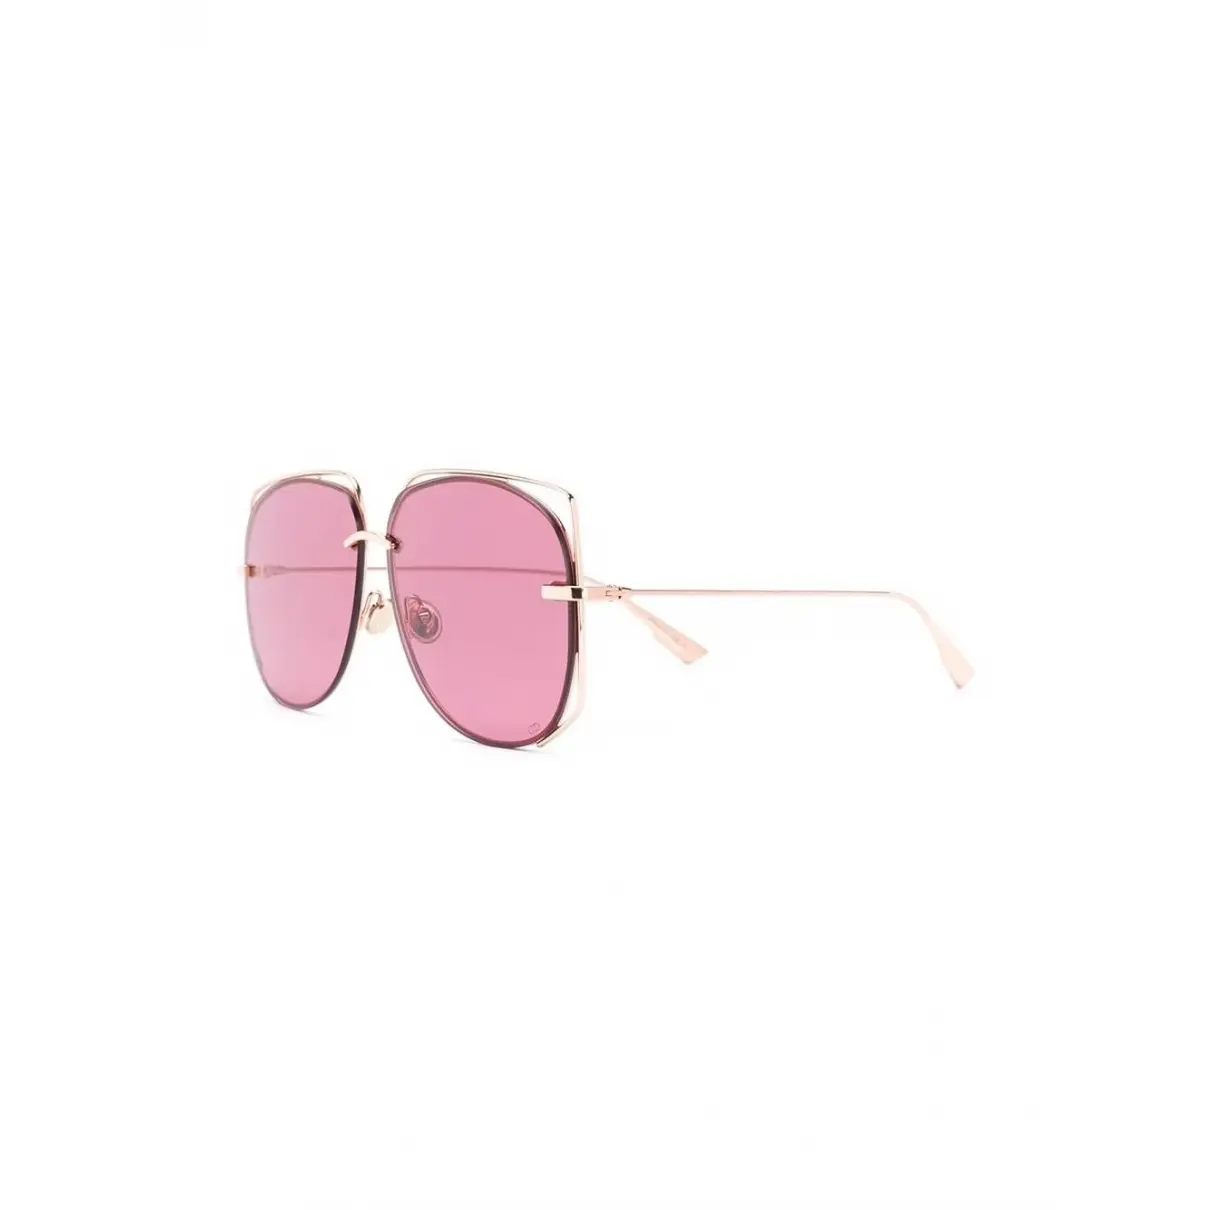 Buy Dior Stellaire 6 aviator sunglasses online